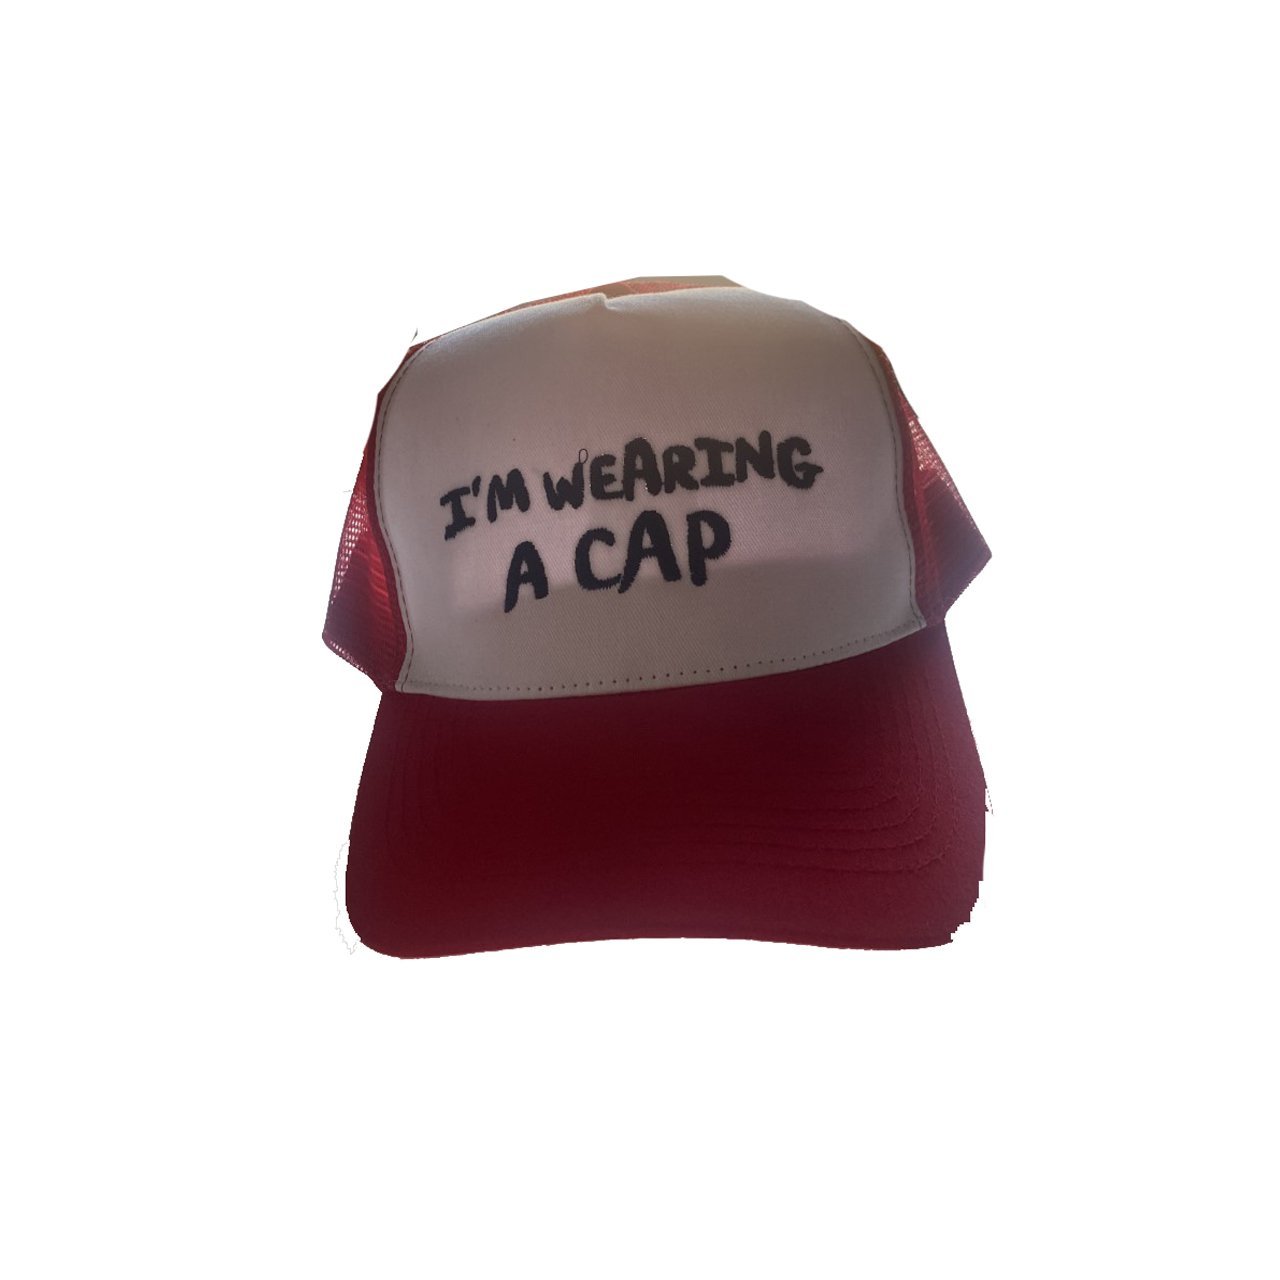 wearing+a+cap2.jpg